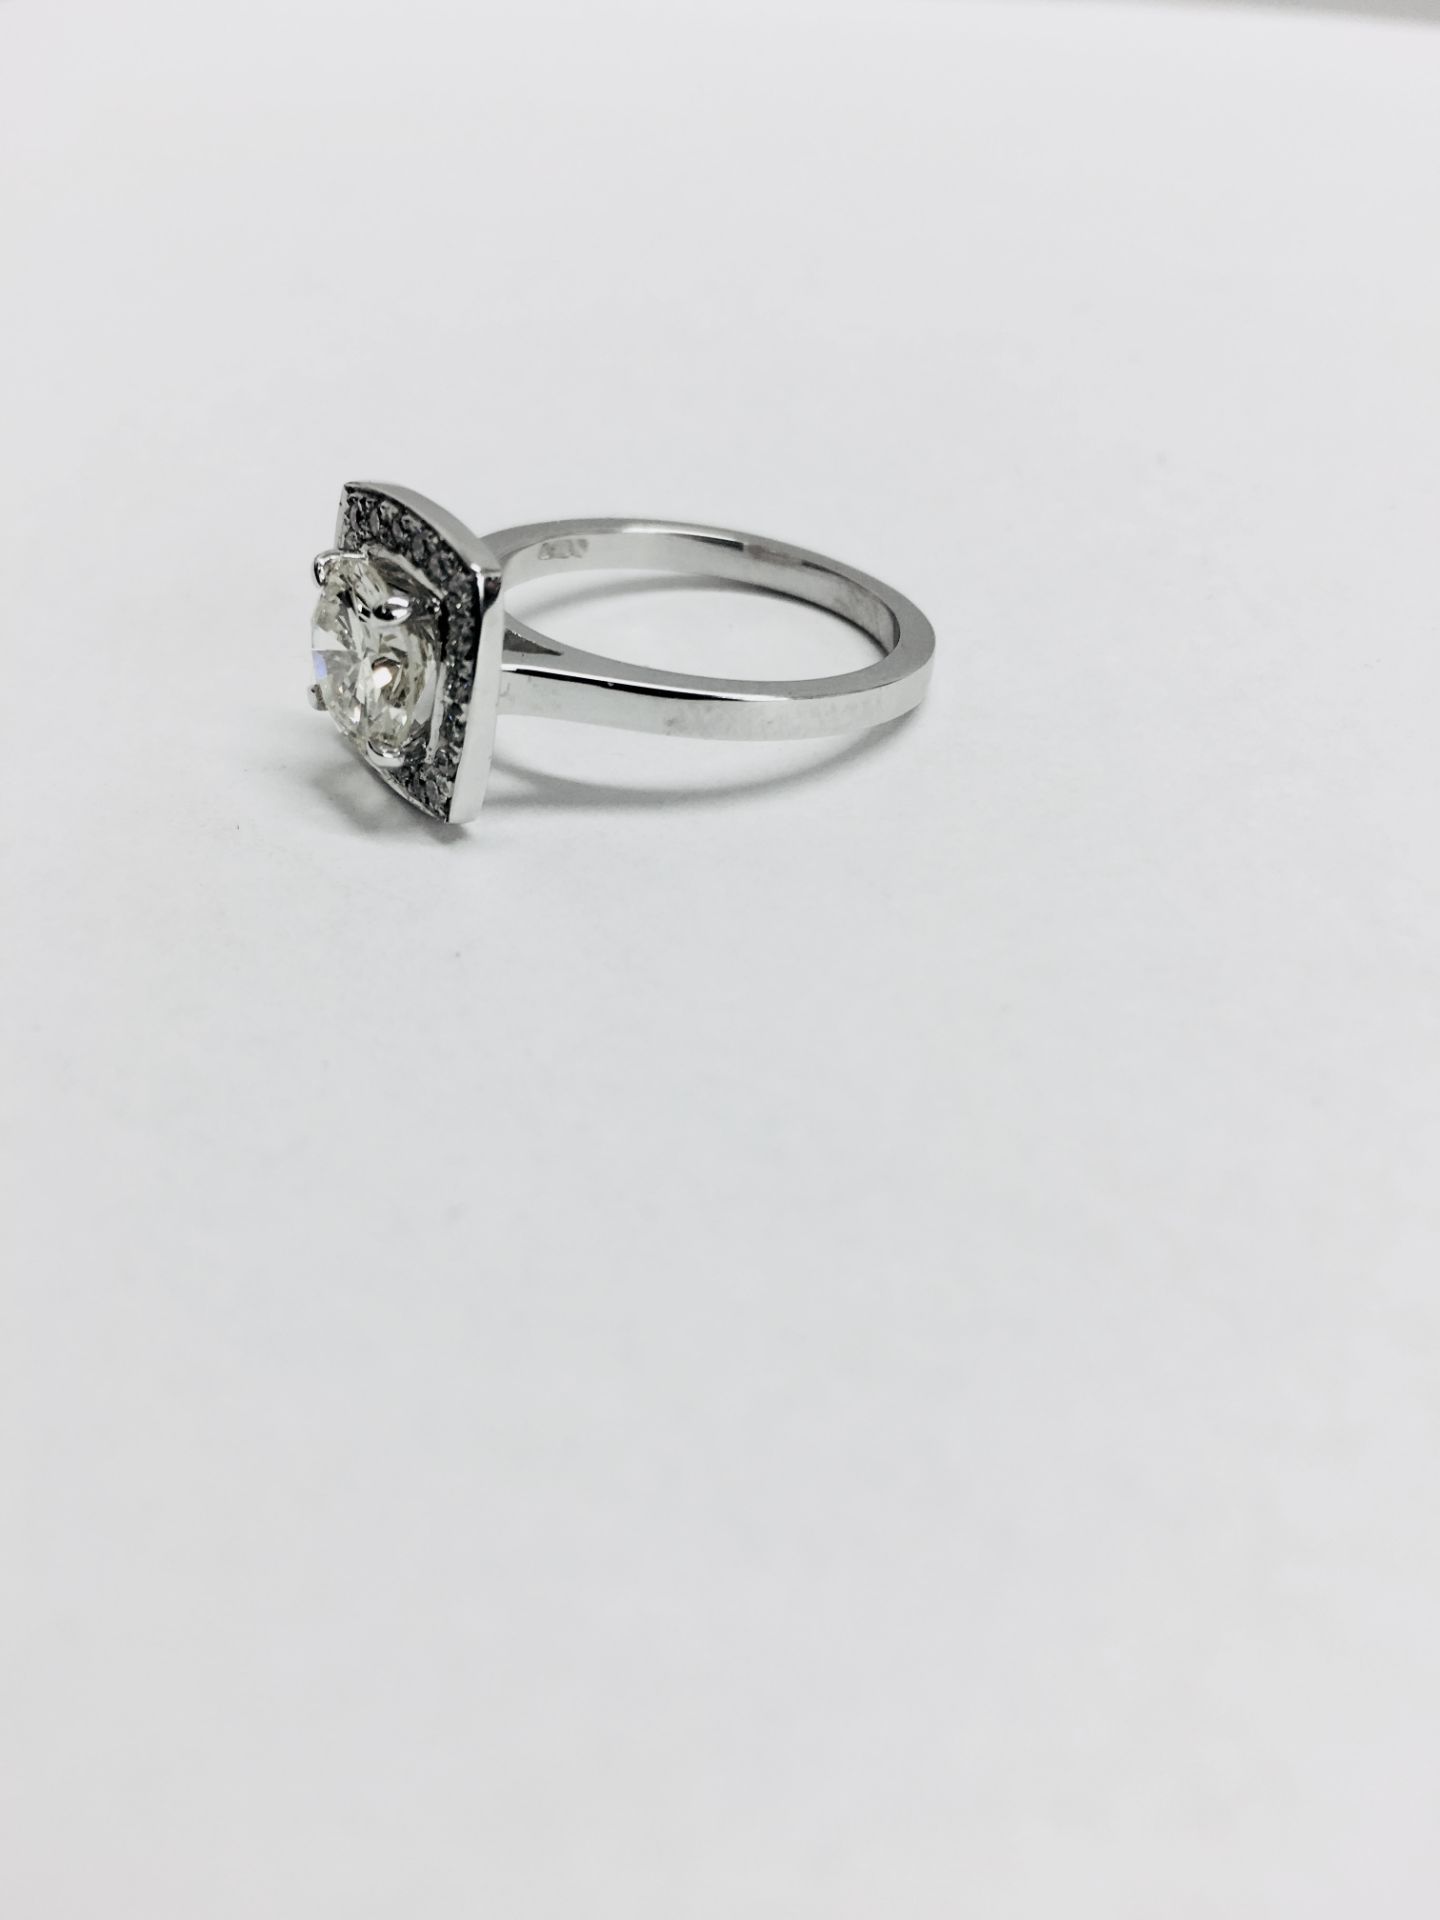 18ct white gold Handmade Halo style ring,0.50ct vs grade h colour diamond(clarity enhanced) - Image 2 of 5